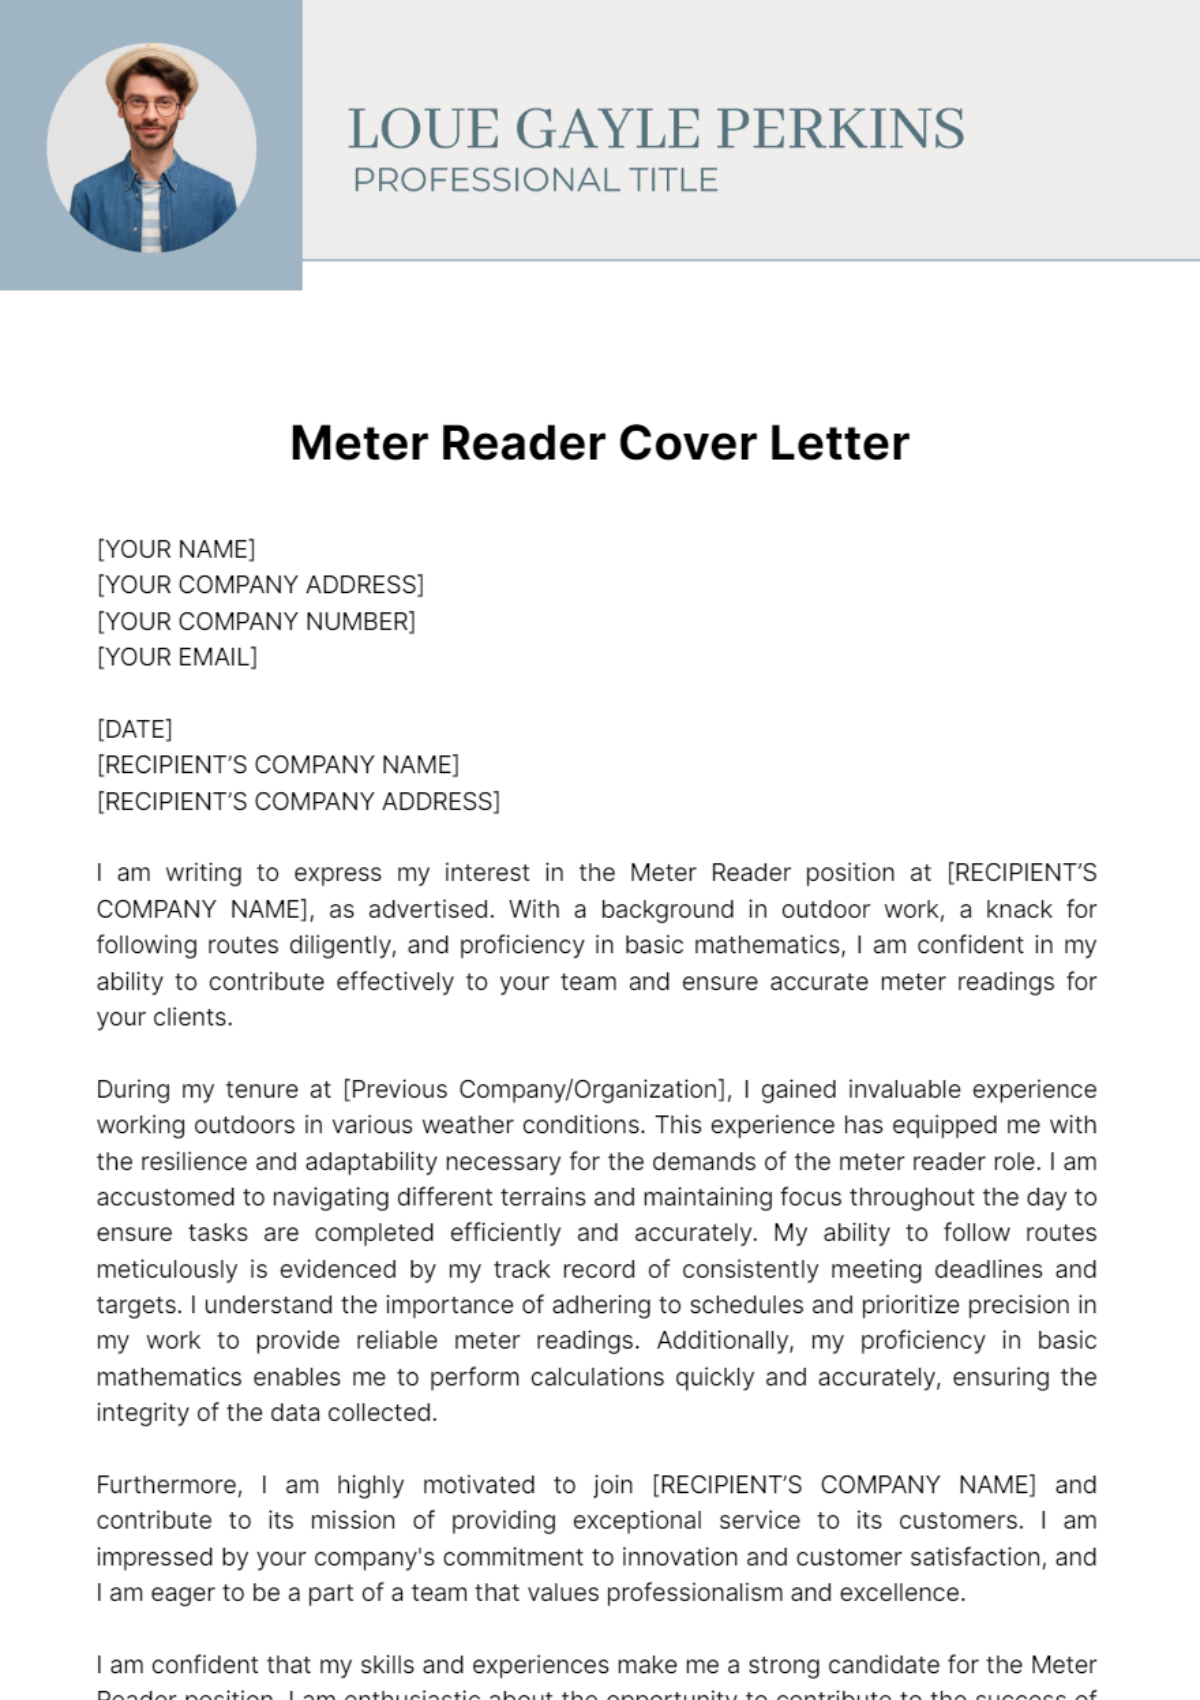 Meter Reader Cover Letter Template